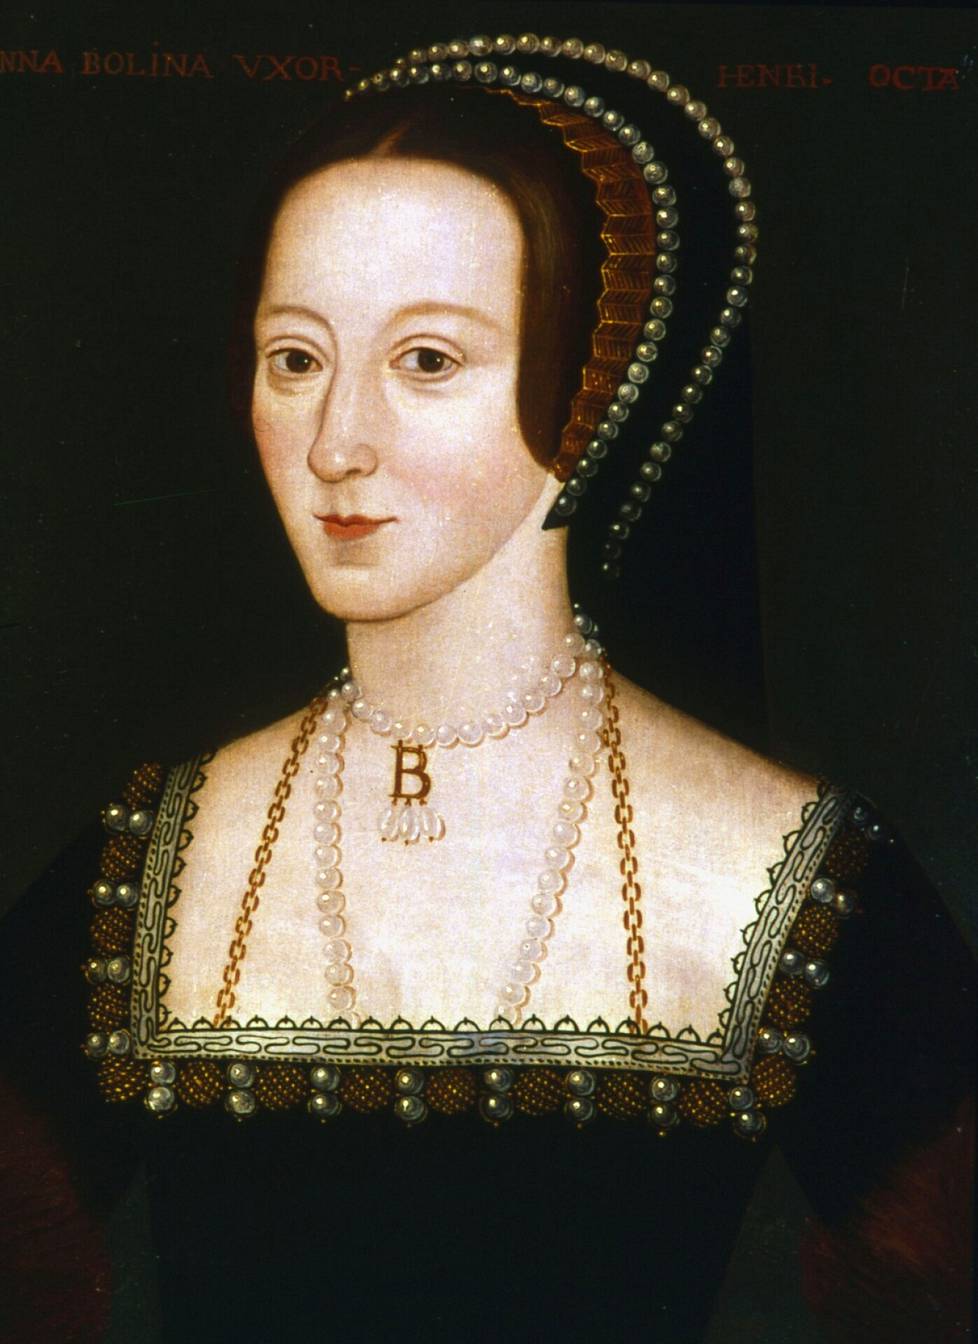 Henry also had affairs outside his marriage, including an affair with Anna Boleyn.